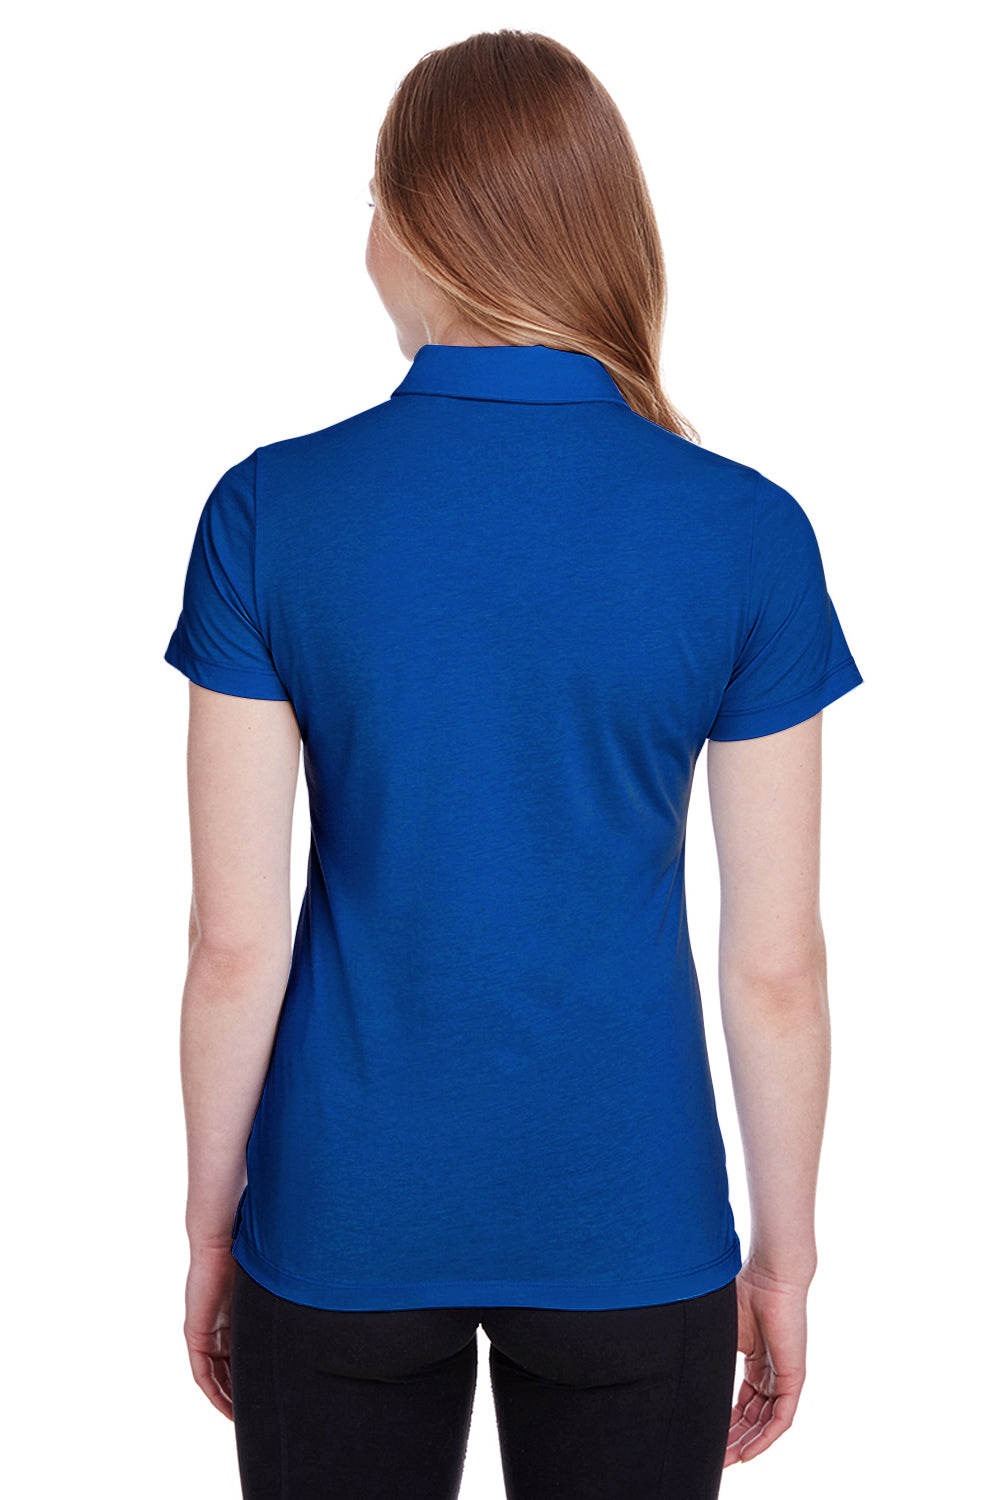 Puma 596921 Womens Fusion Performance Moisture Wicking Short Sleeve Polo Shirt Royal Blue Back